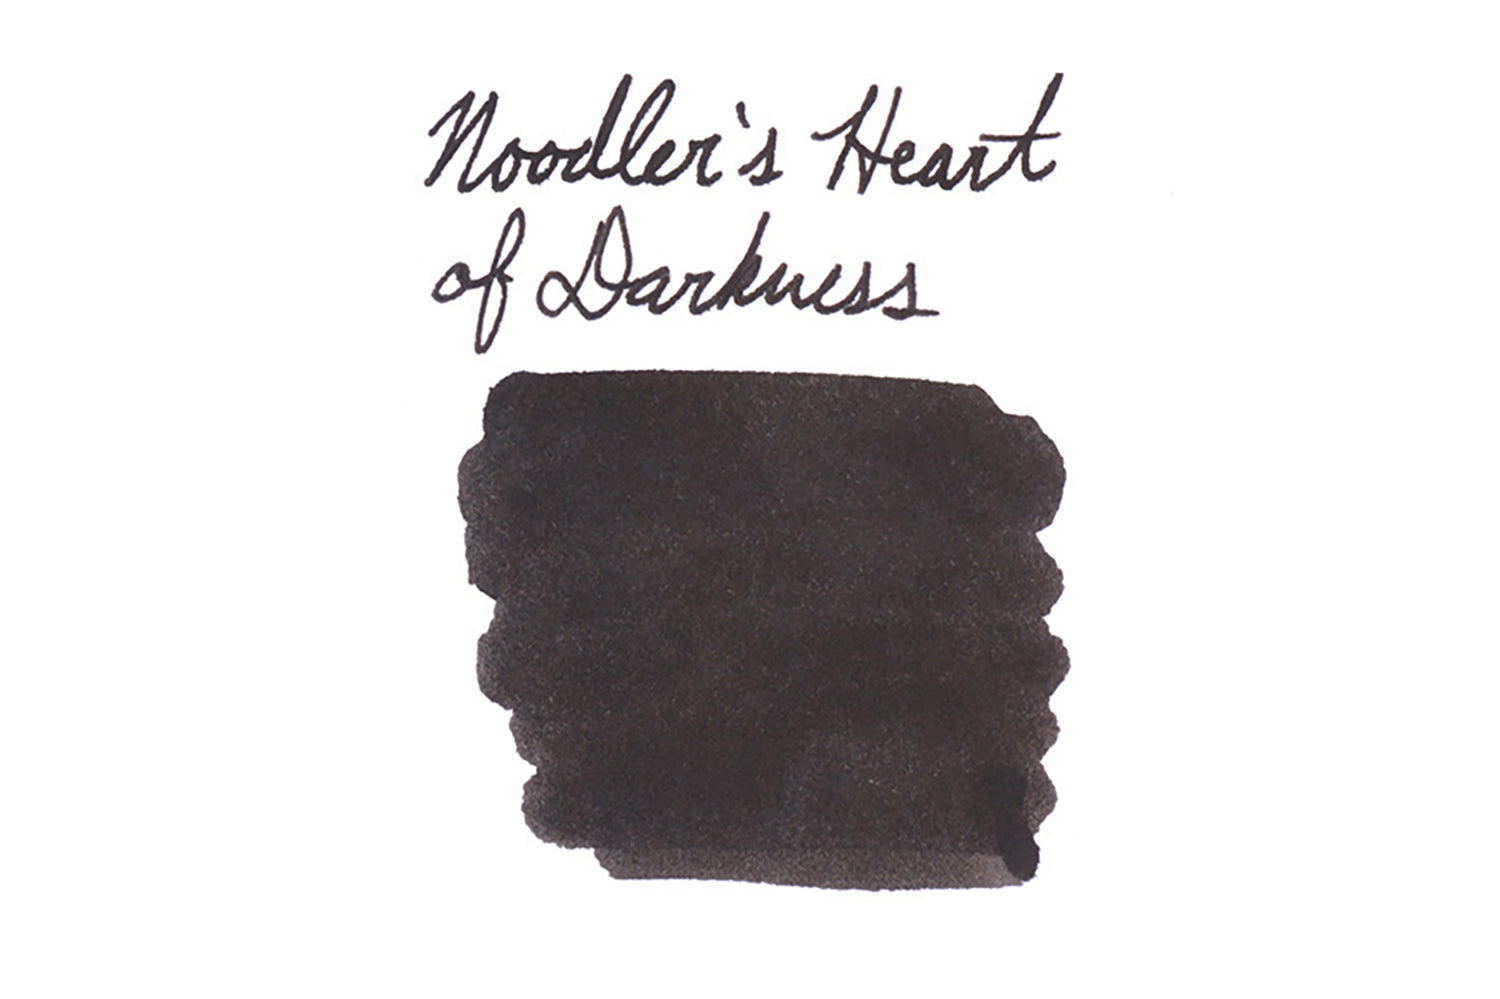 Noodler's Golden Brown: Ink Review - The Goulet Pen Company